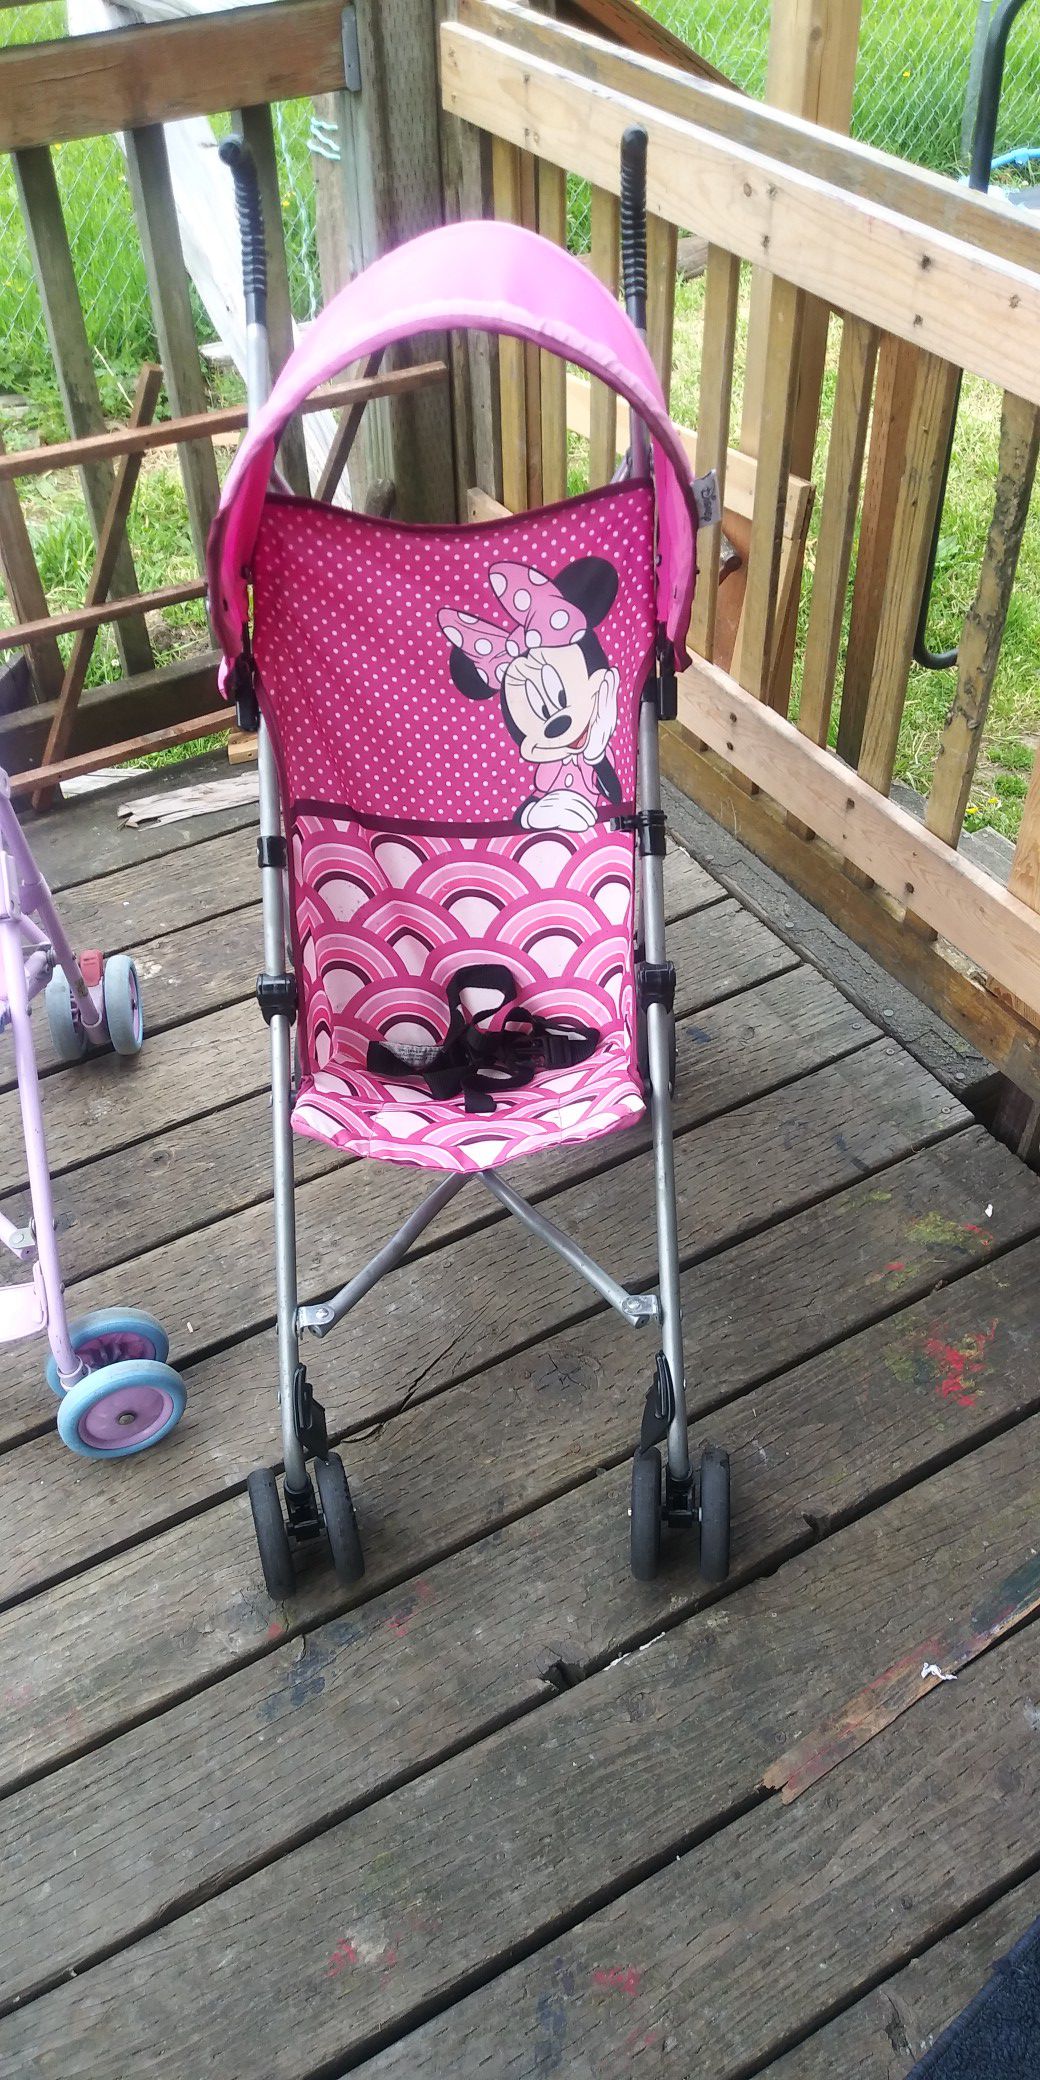 Disney Minnie Mouse Umbrella Stroller